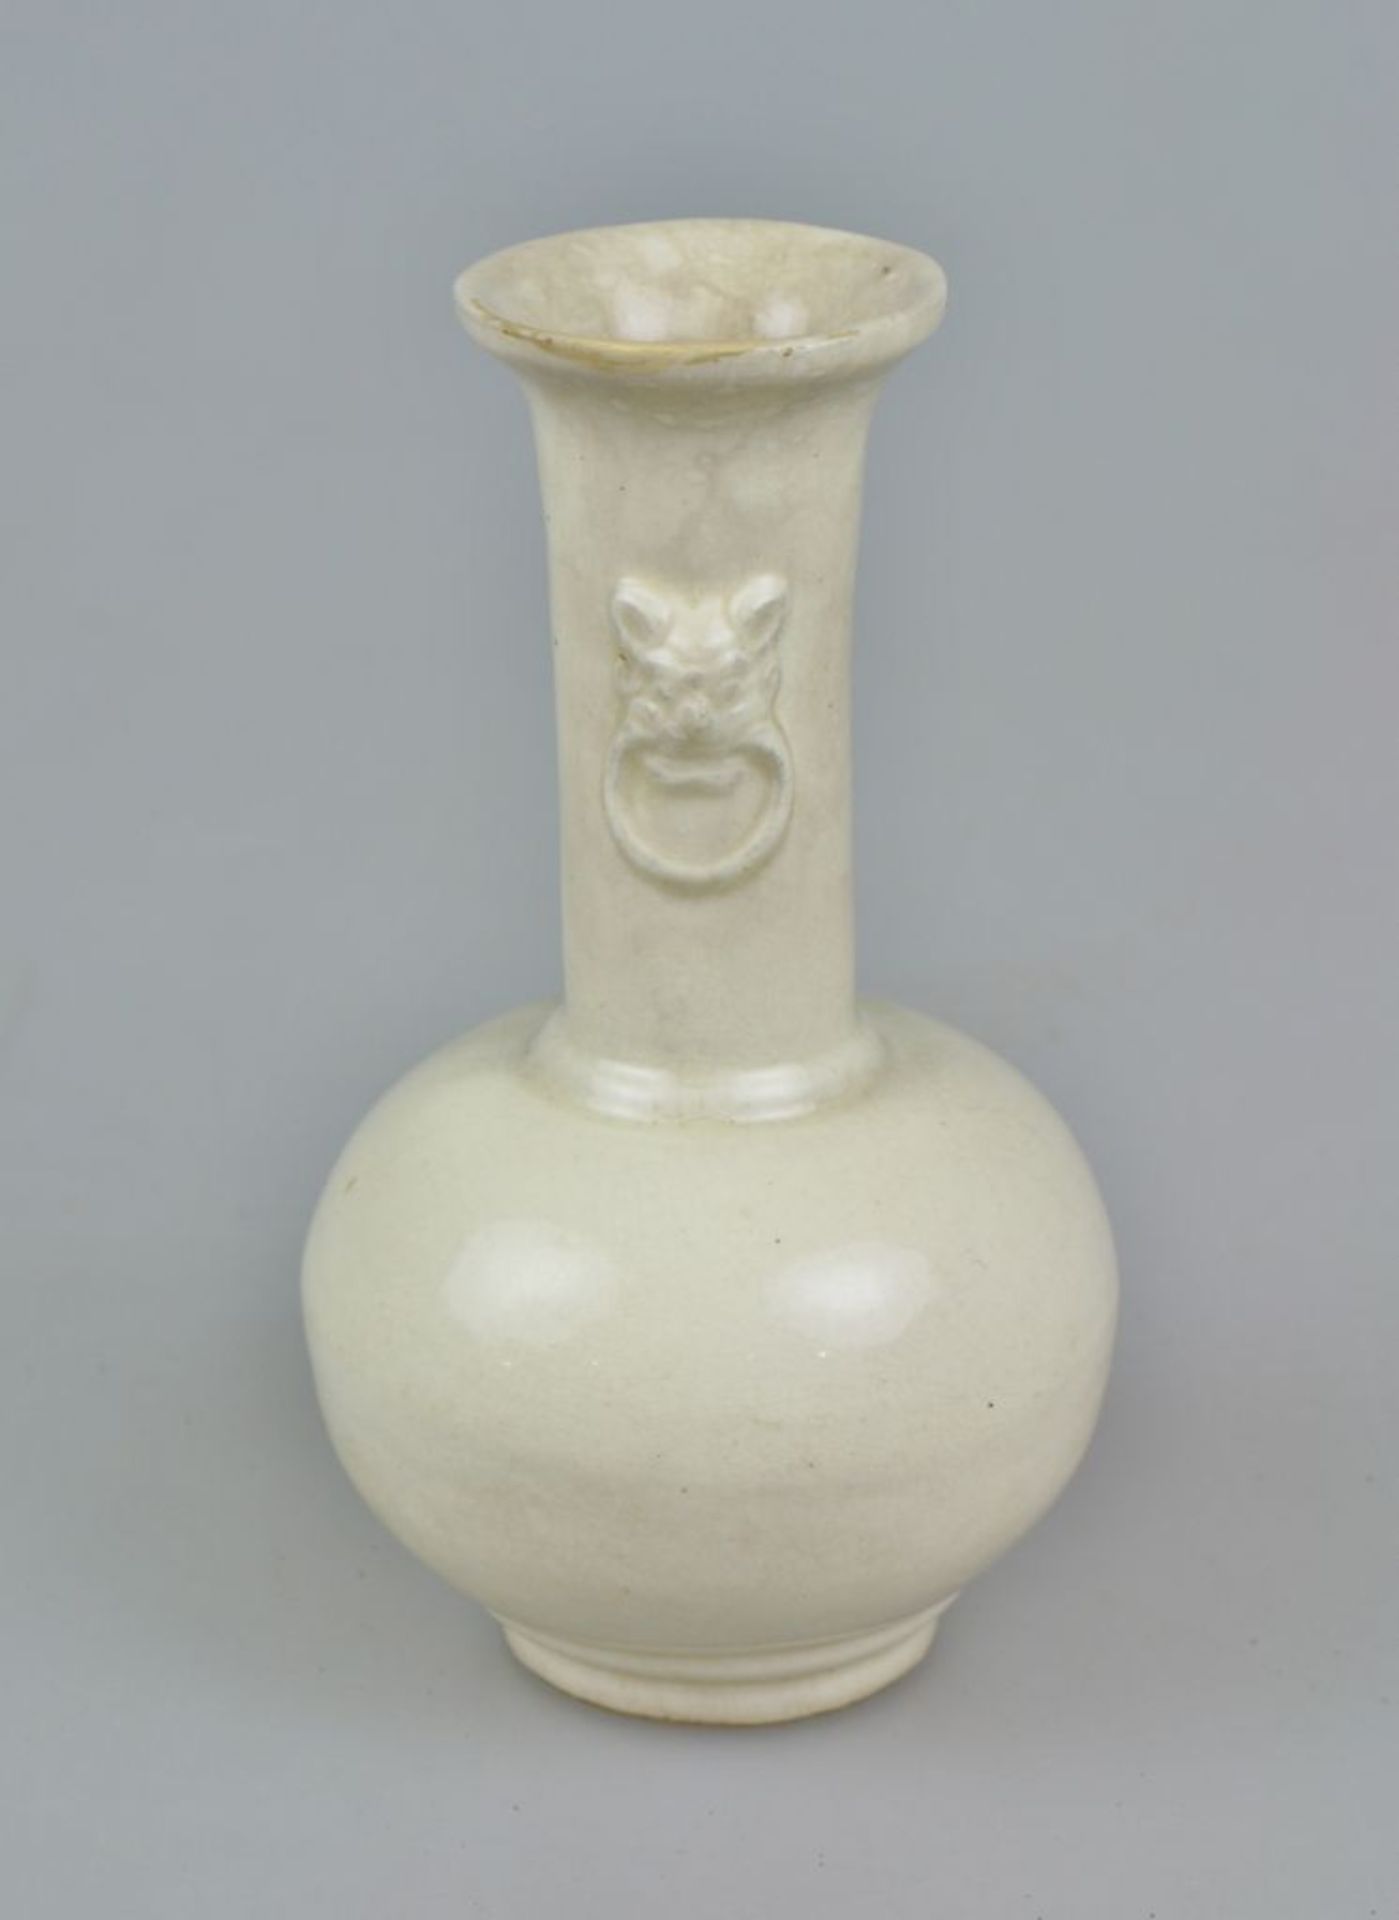 Enghalsvase, China, Keramik, seladonartige Glasur, vor 1800, auf rundem Standring kugeliger Korpus - Bild 2 aus 2